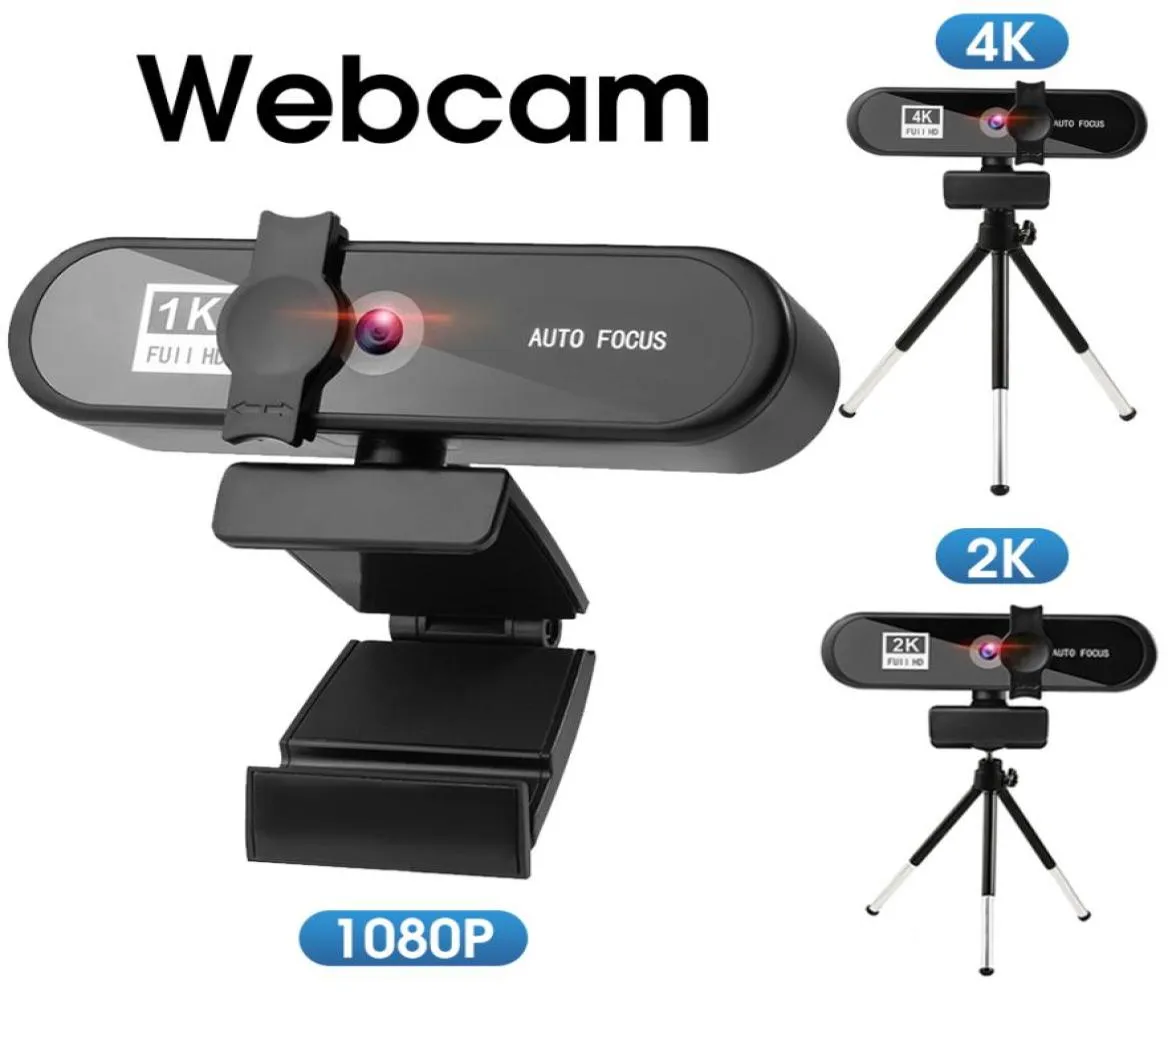 Webcam 1080P Mini Computer PC Camara Auto Focus Laptop Webcam 4K With Microphone Web Cam For YouTube Live Broadcast Video Work5699262